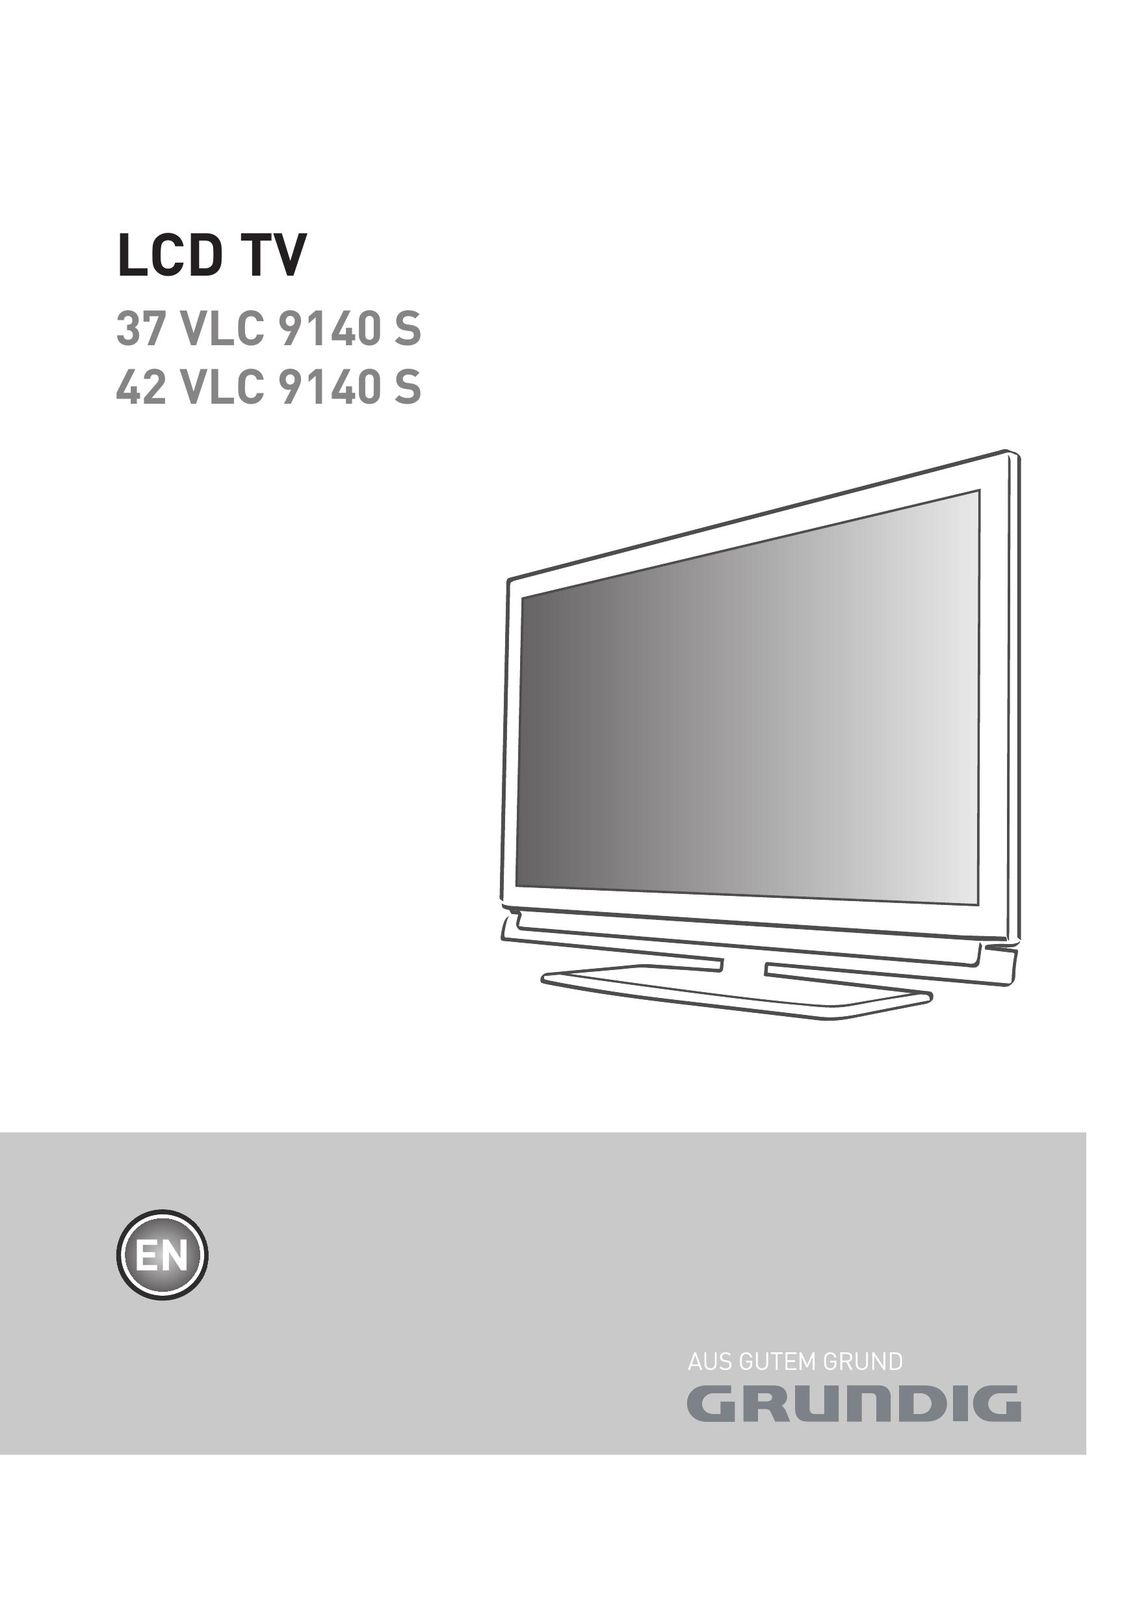 Grundig 37 VLC 9140 S Flat Panel Television User Manual